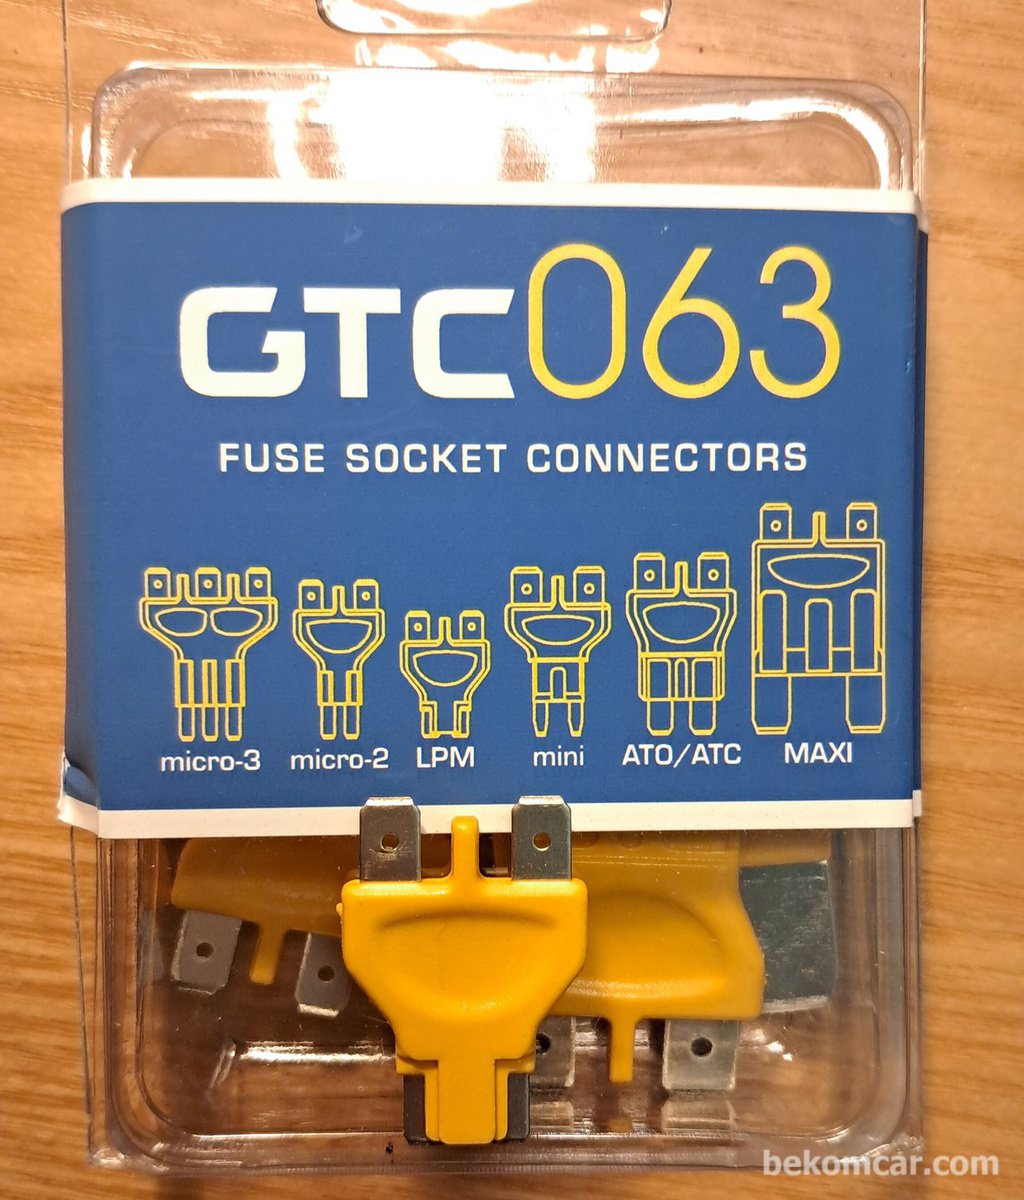 GTC063 Fuse Socket Connector Kit by GTC, General Technologies Corp|بيكومكار  (bekomcar)